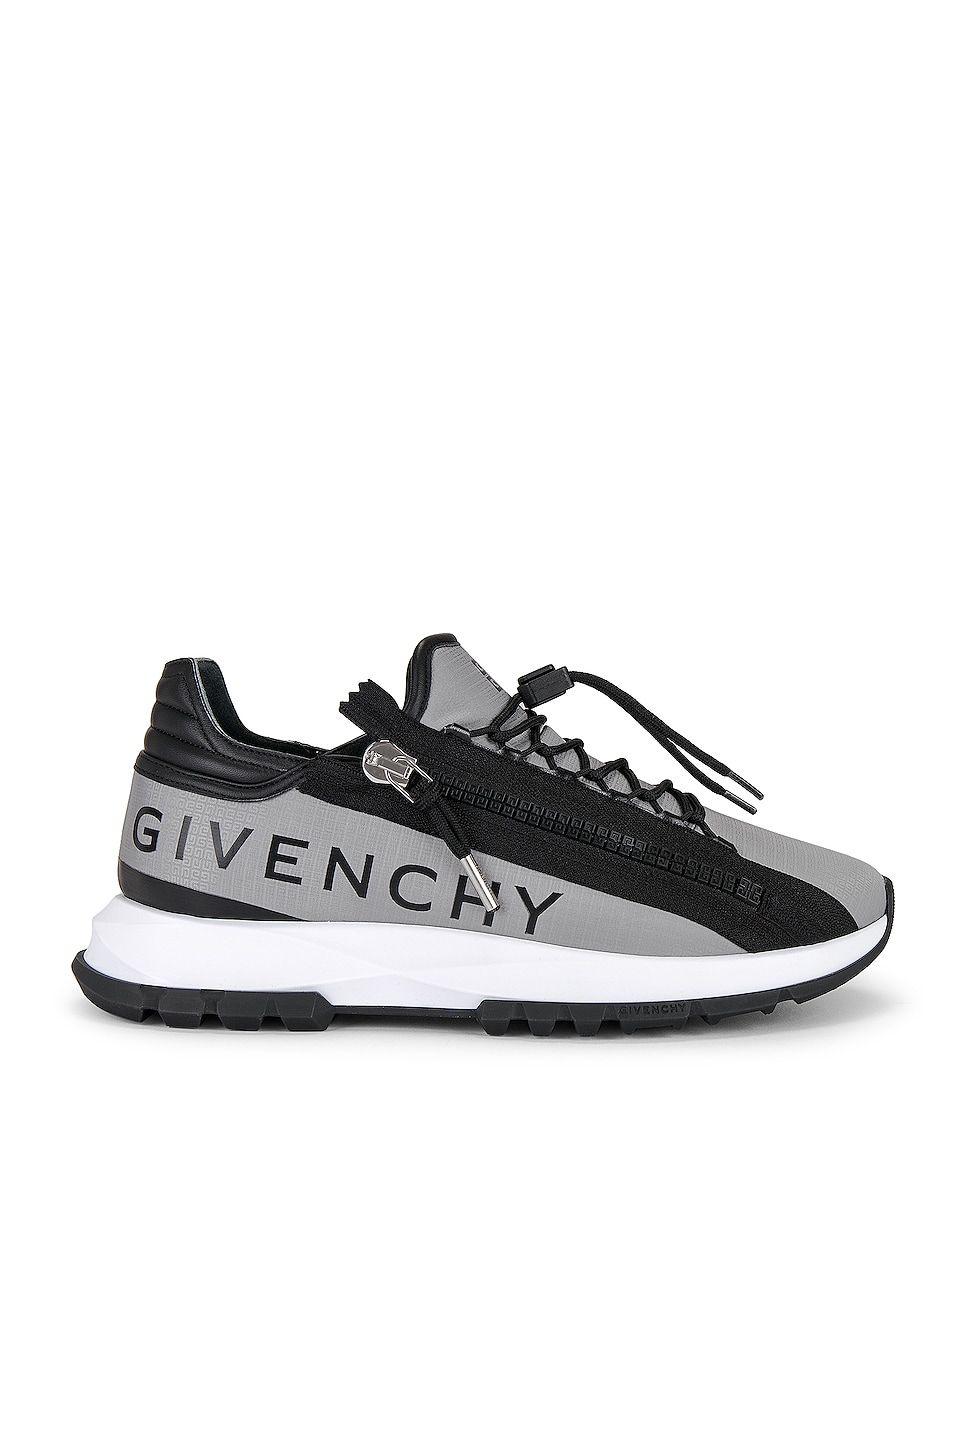 Image 1 of Givenchy Spectre Zip Runner Sneaker in Grey & Black